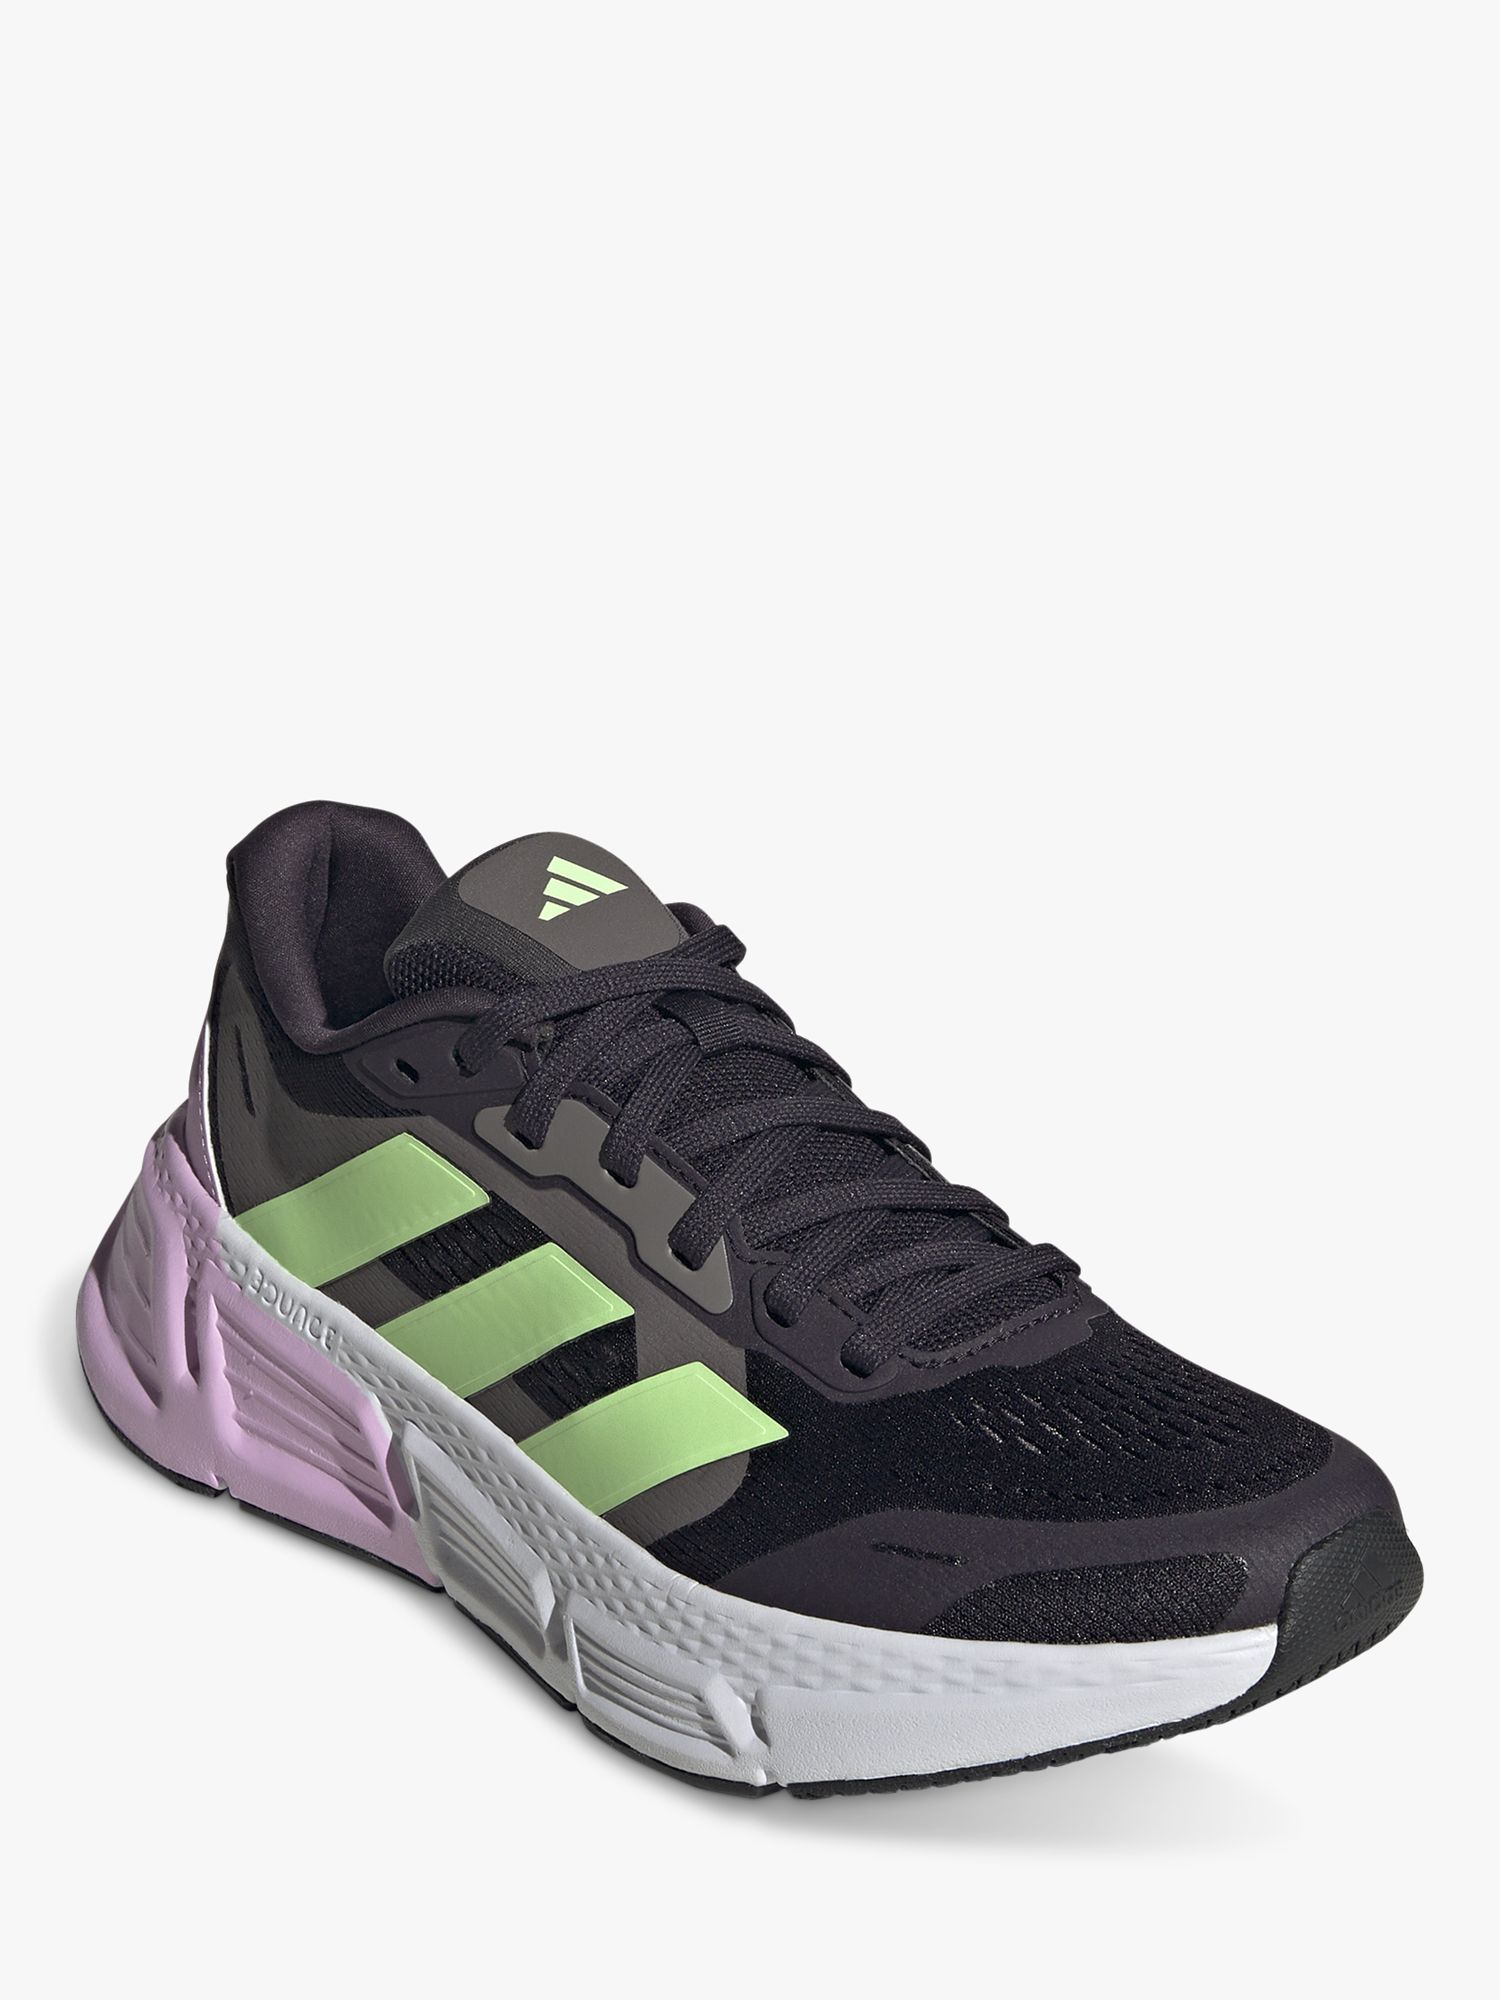 adidas Questar 2 Bounce Women's Running Shoes, Green/Lilac, 4